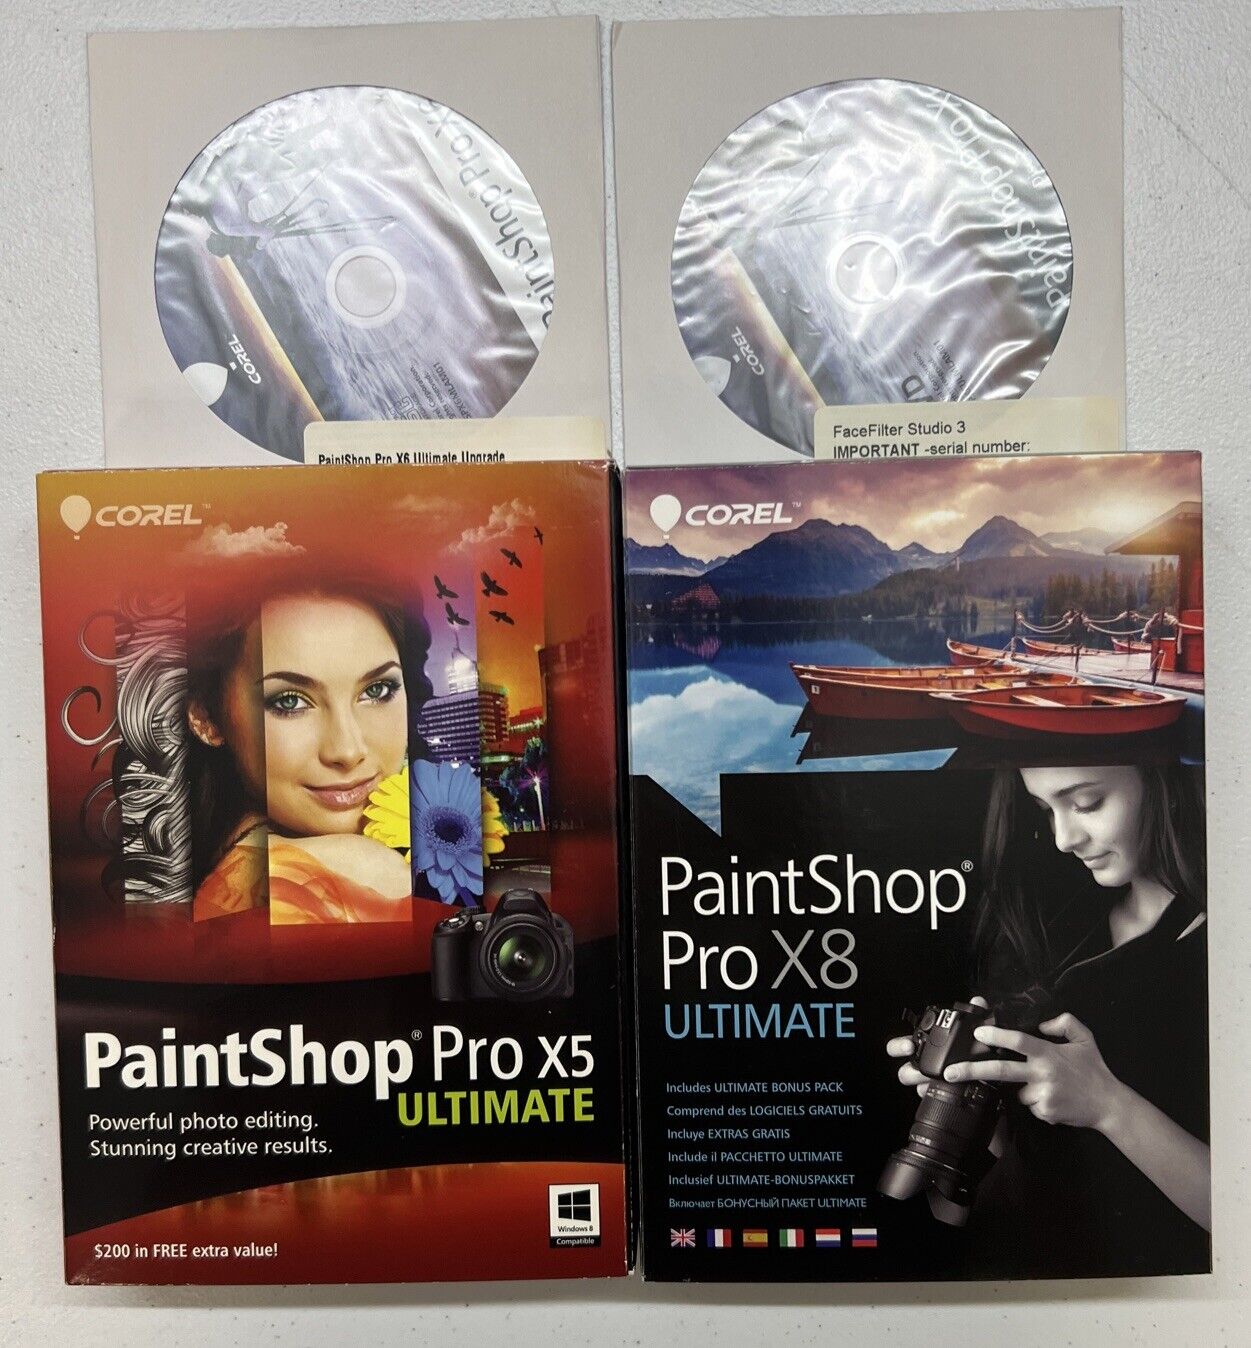 Corel PaintShop Pro X8 and Pro X5 Ultimate Photo Graphic Editing Software